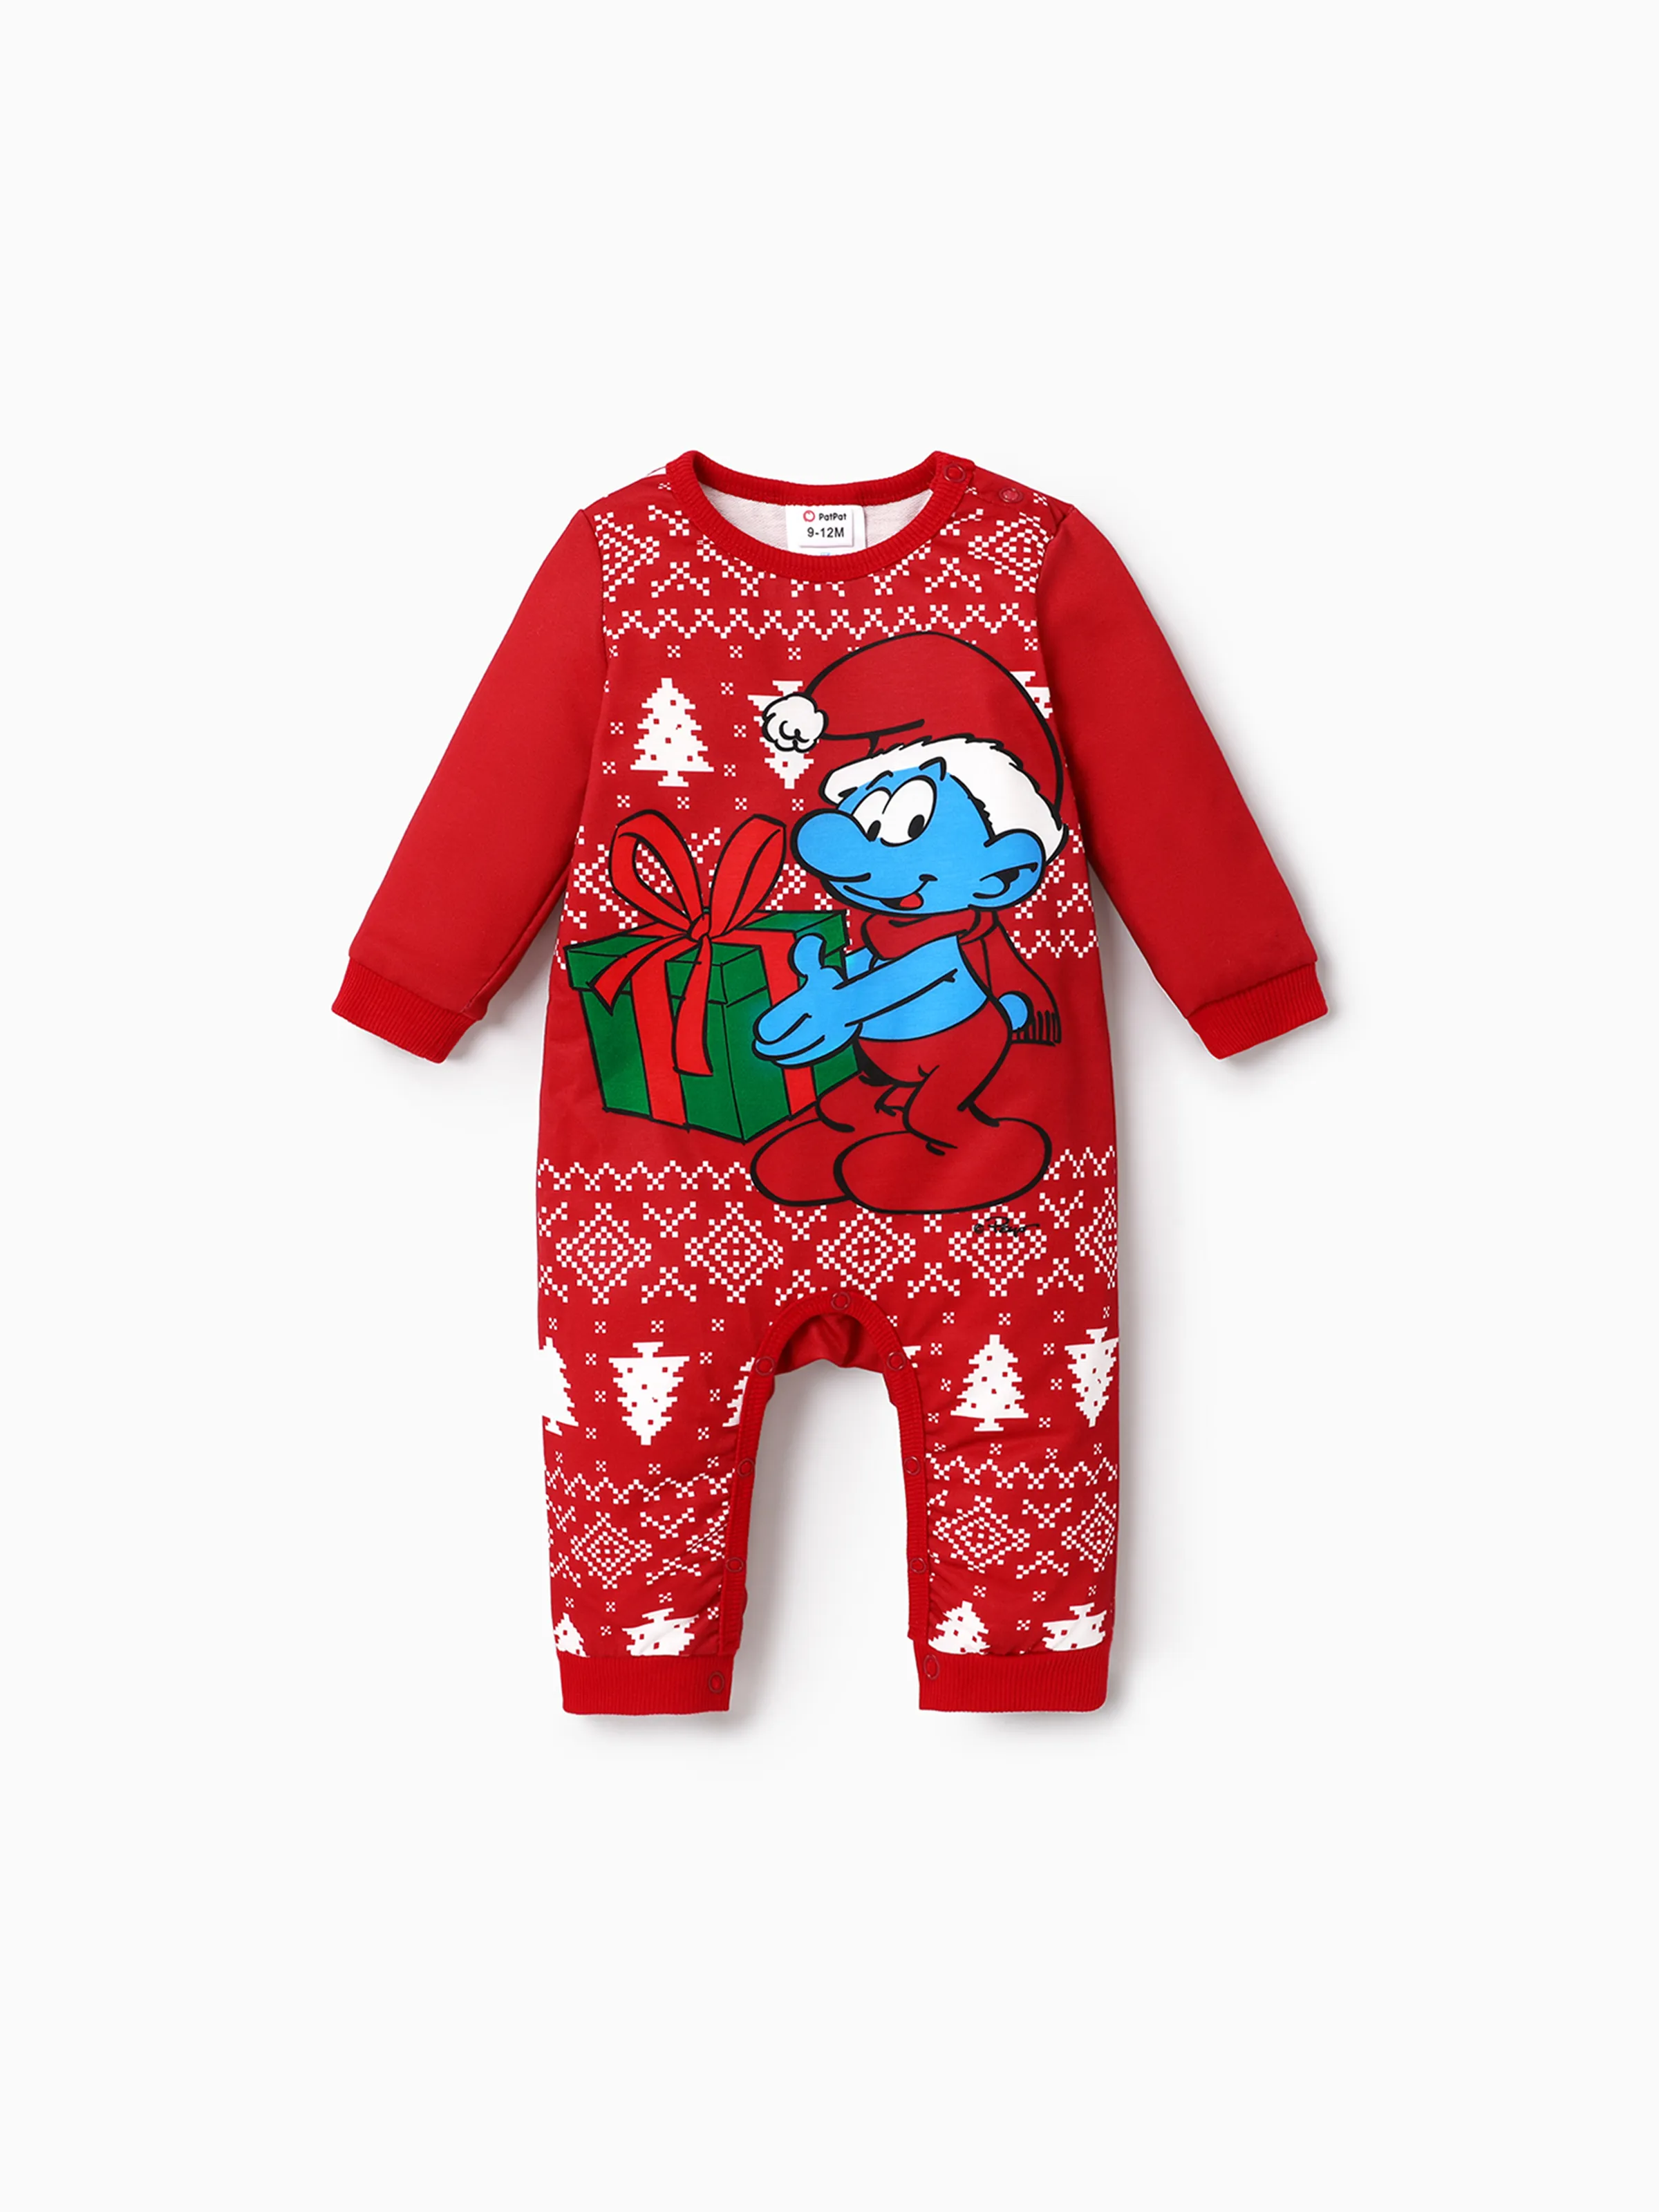 

The Smurfs Family Matching Christmas Character & Snowflake Print Long-sleeve Top